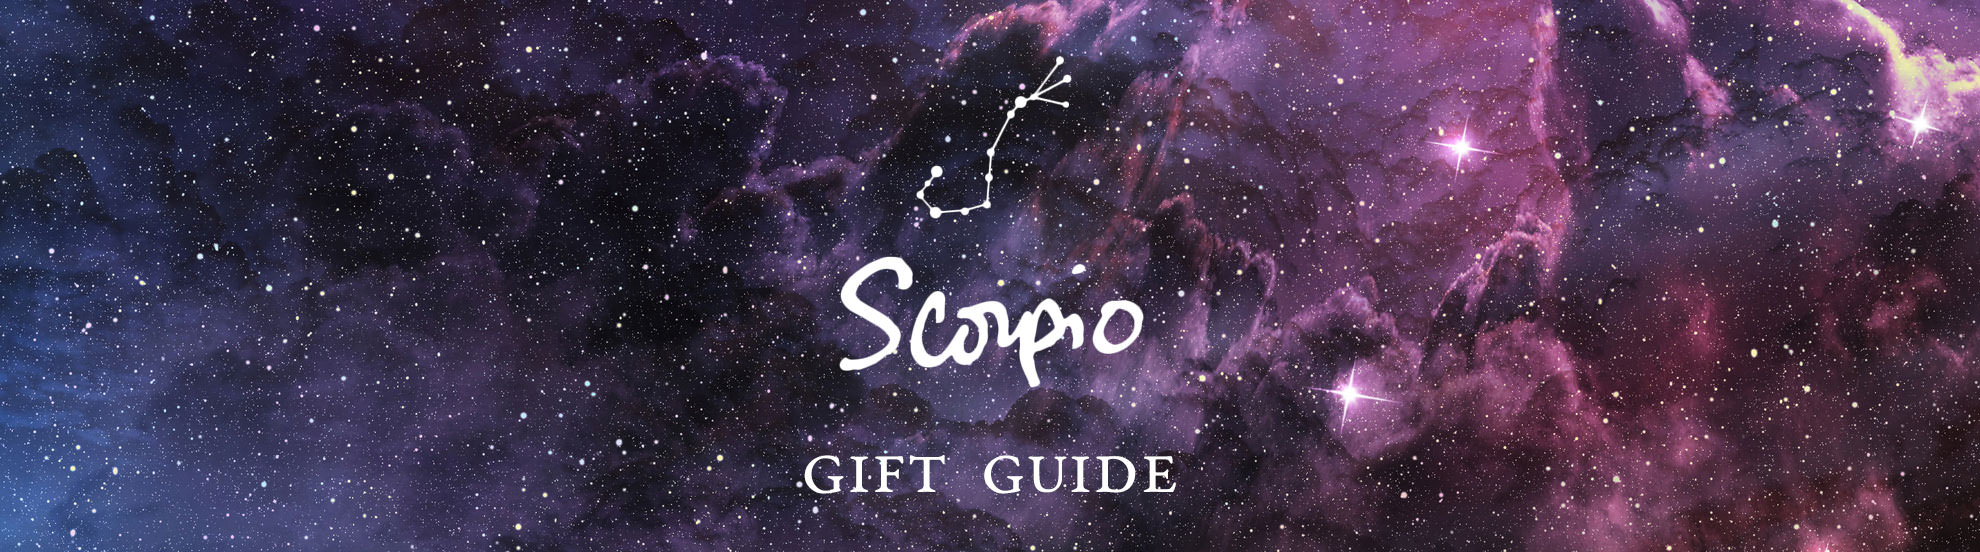 Scorpio Gift Guide